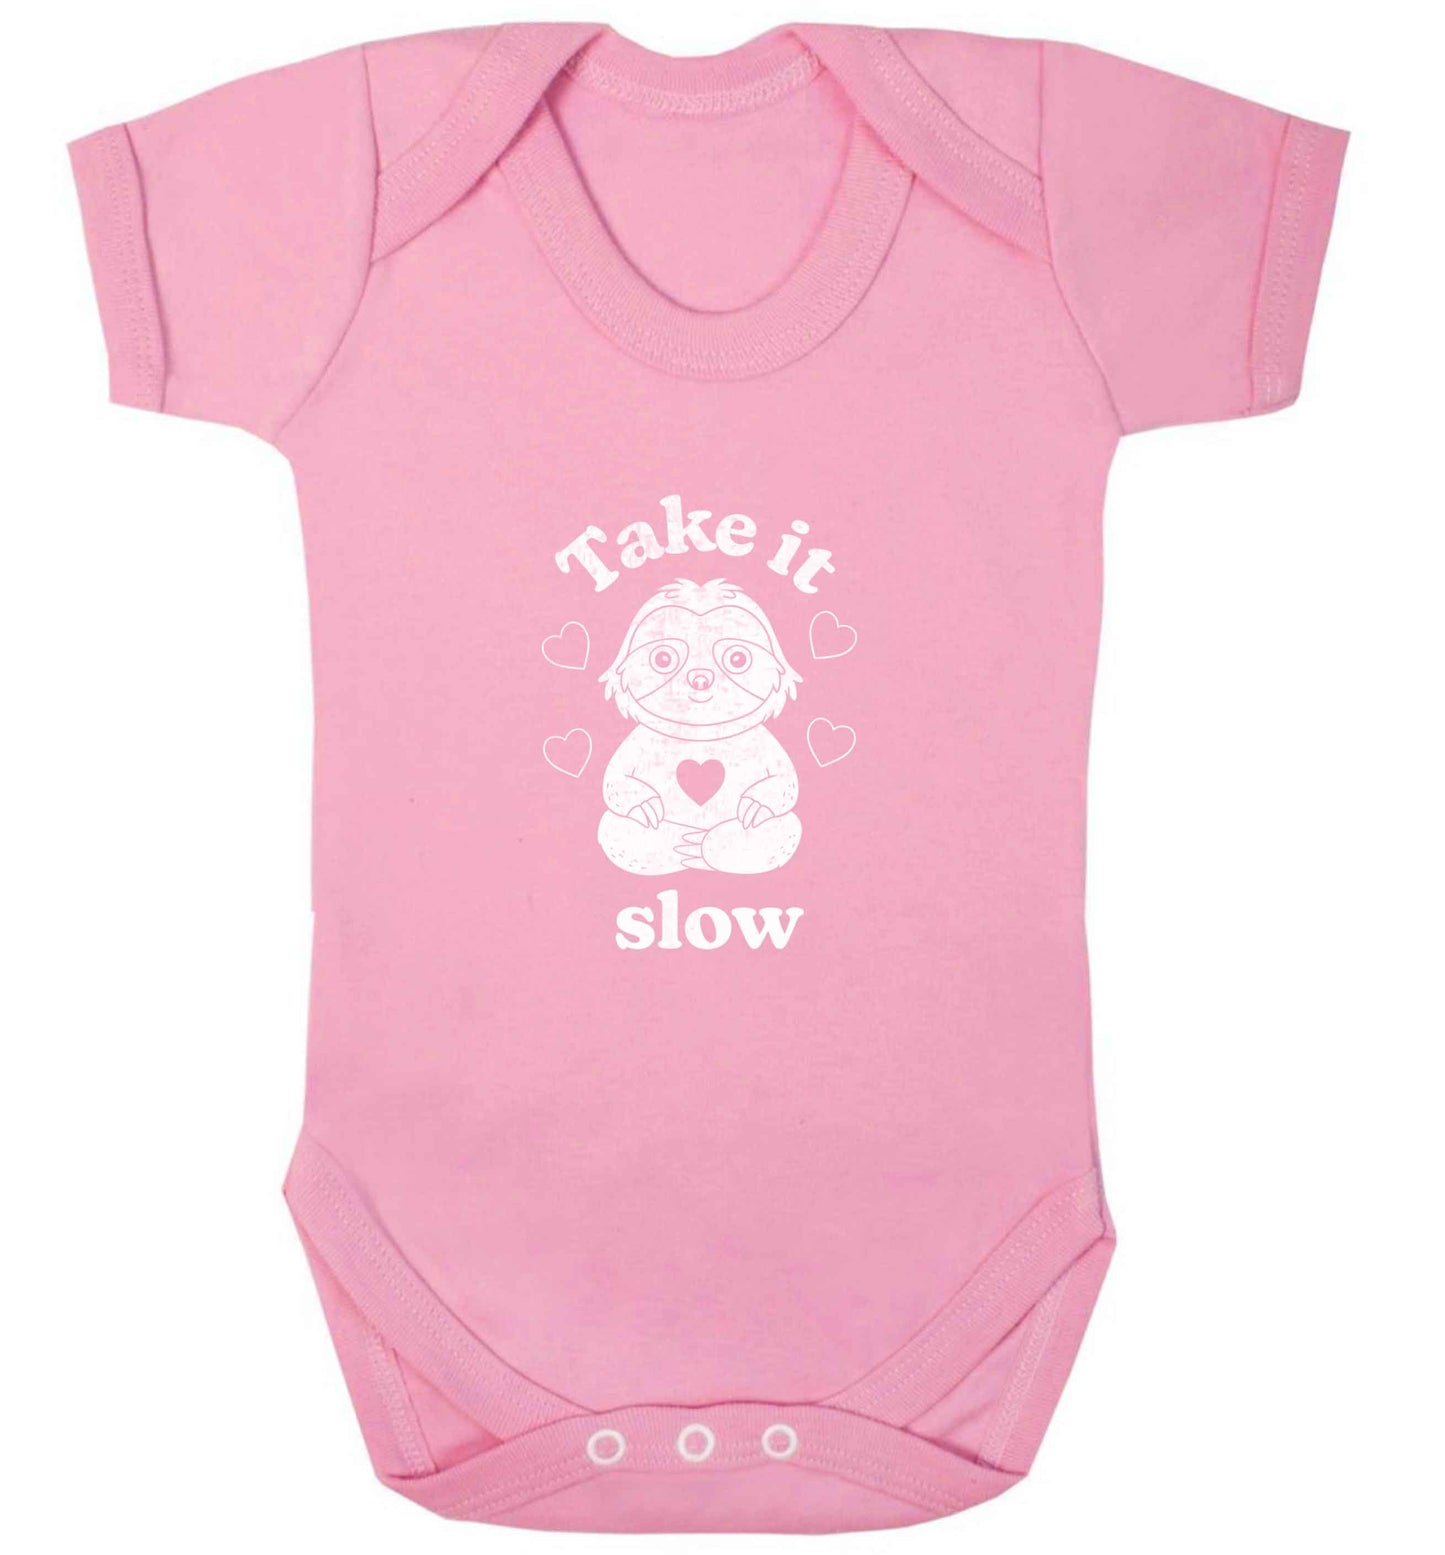 Take it slow baby vest pale pink 18-24 months